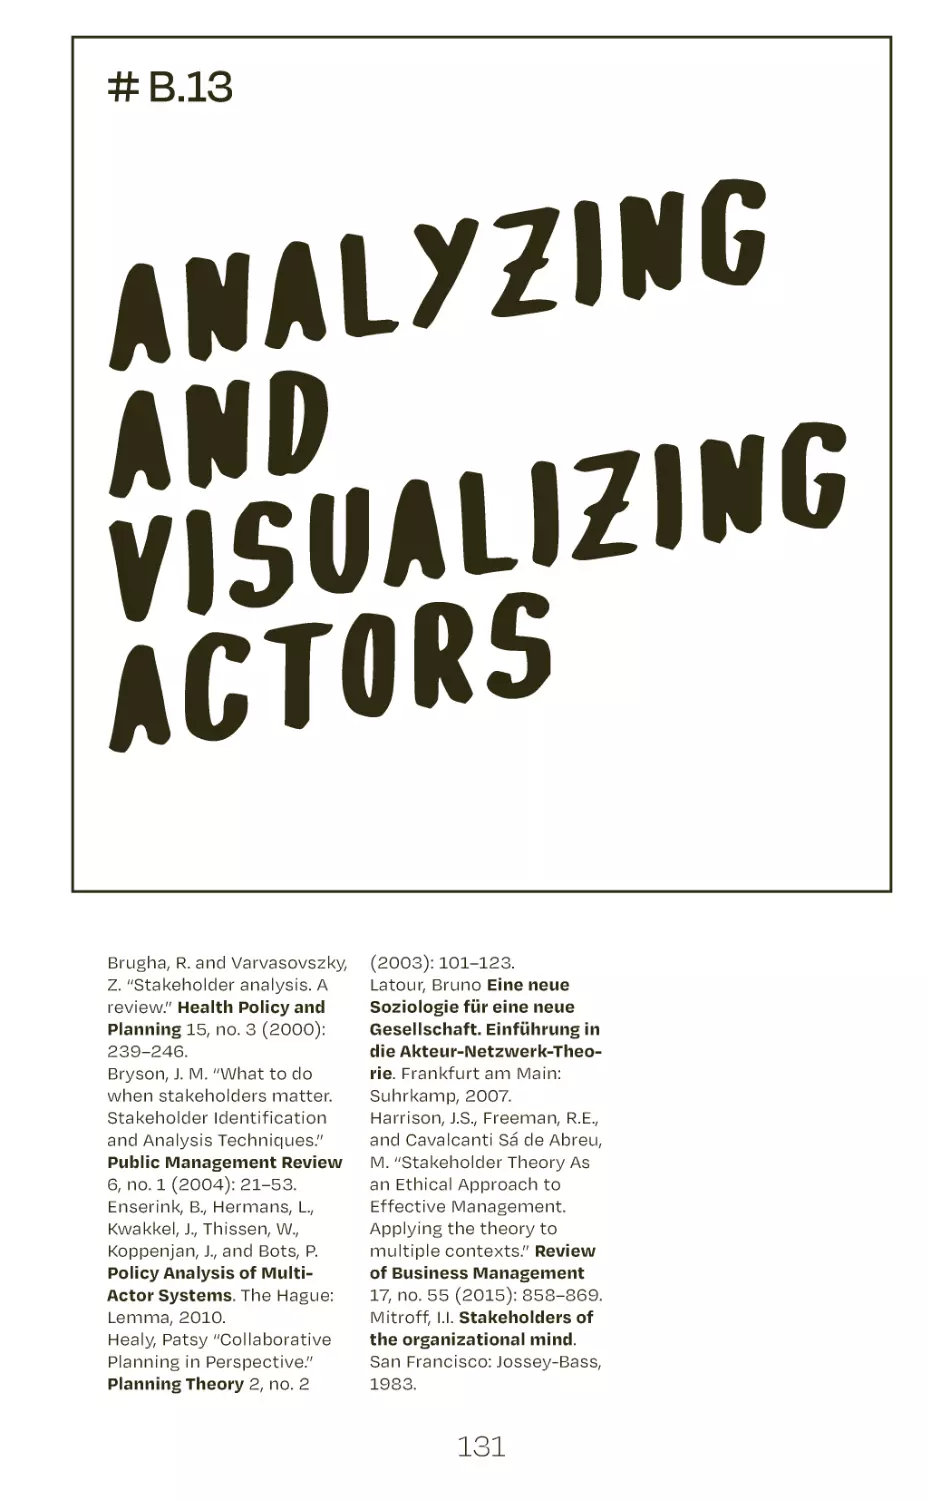 # B.13 analyzing and visualizing actors